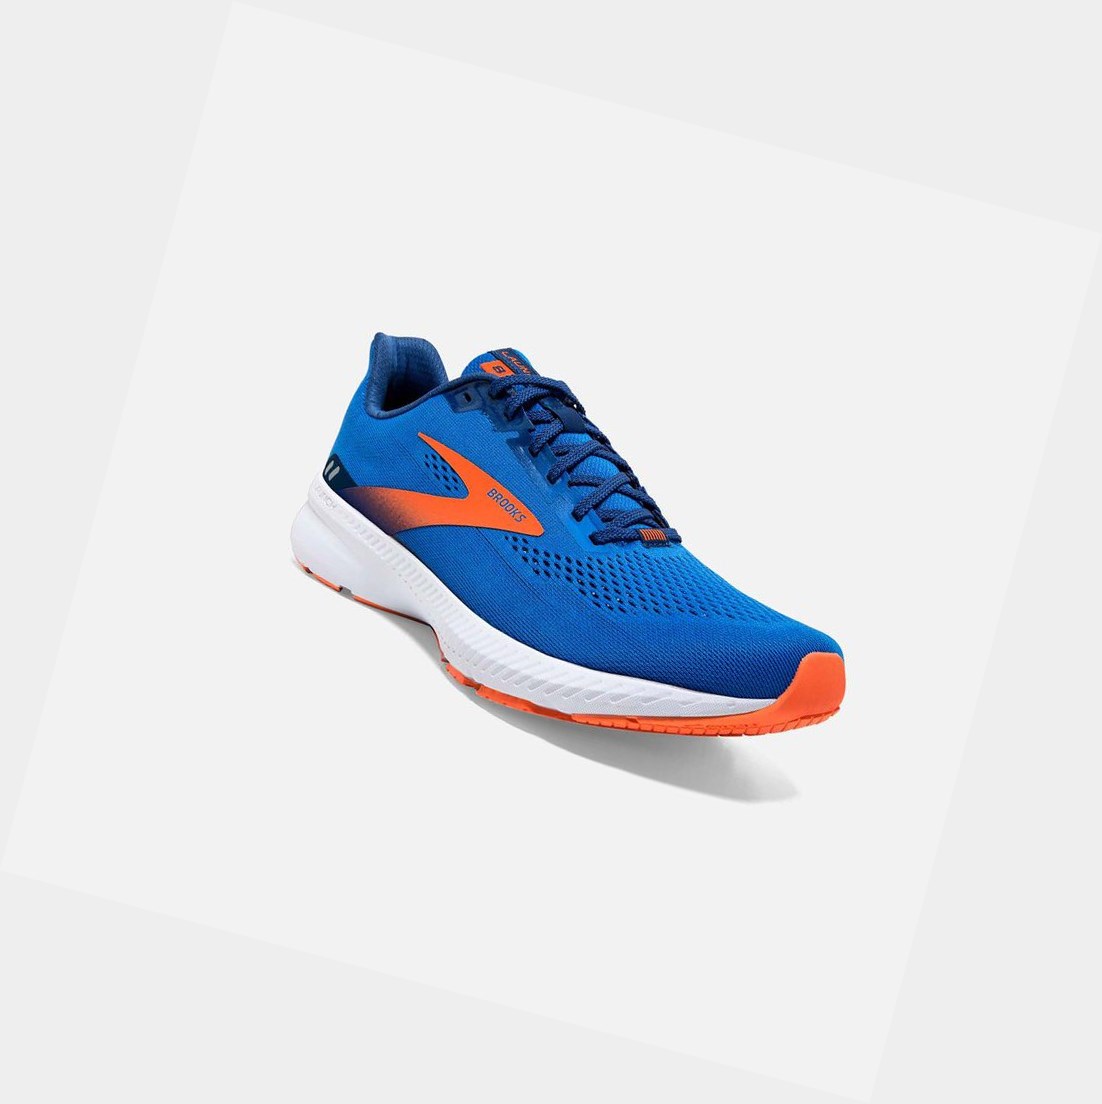 Brooks Launch 8 Men's Road Running Shoes Blue / Orange / White | MOUX-86130